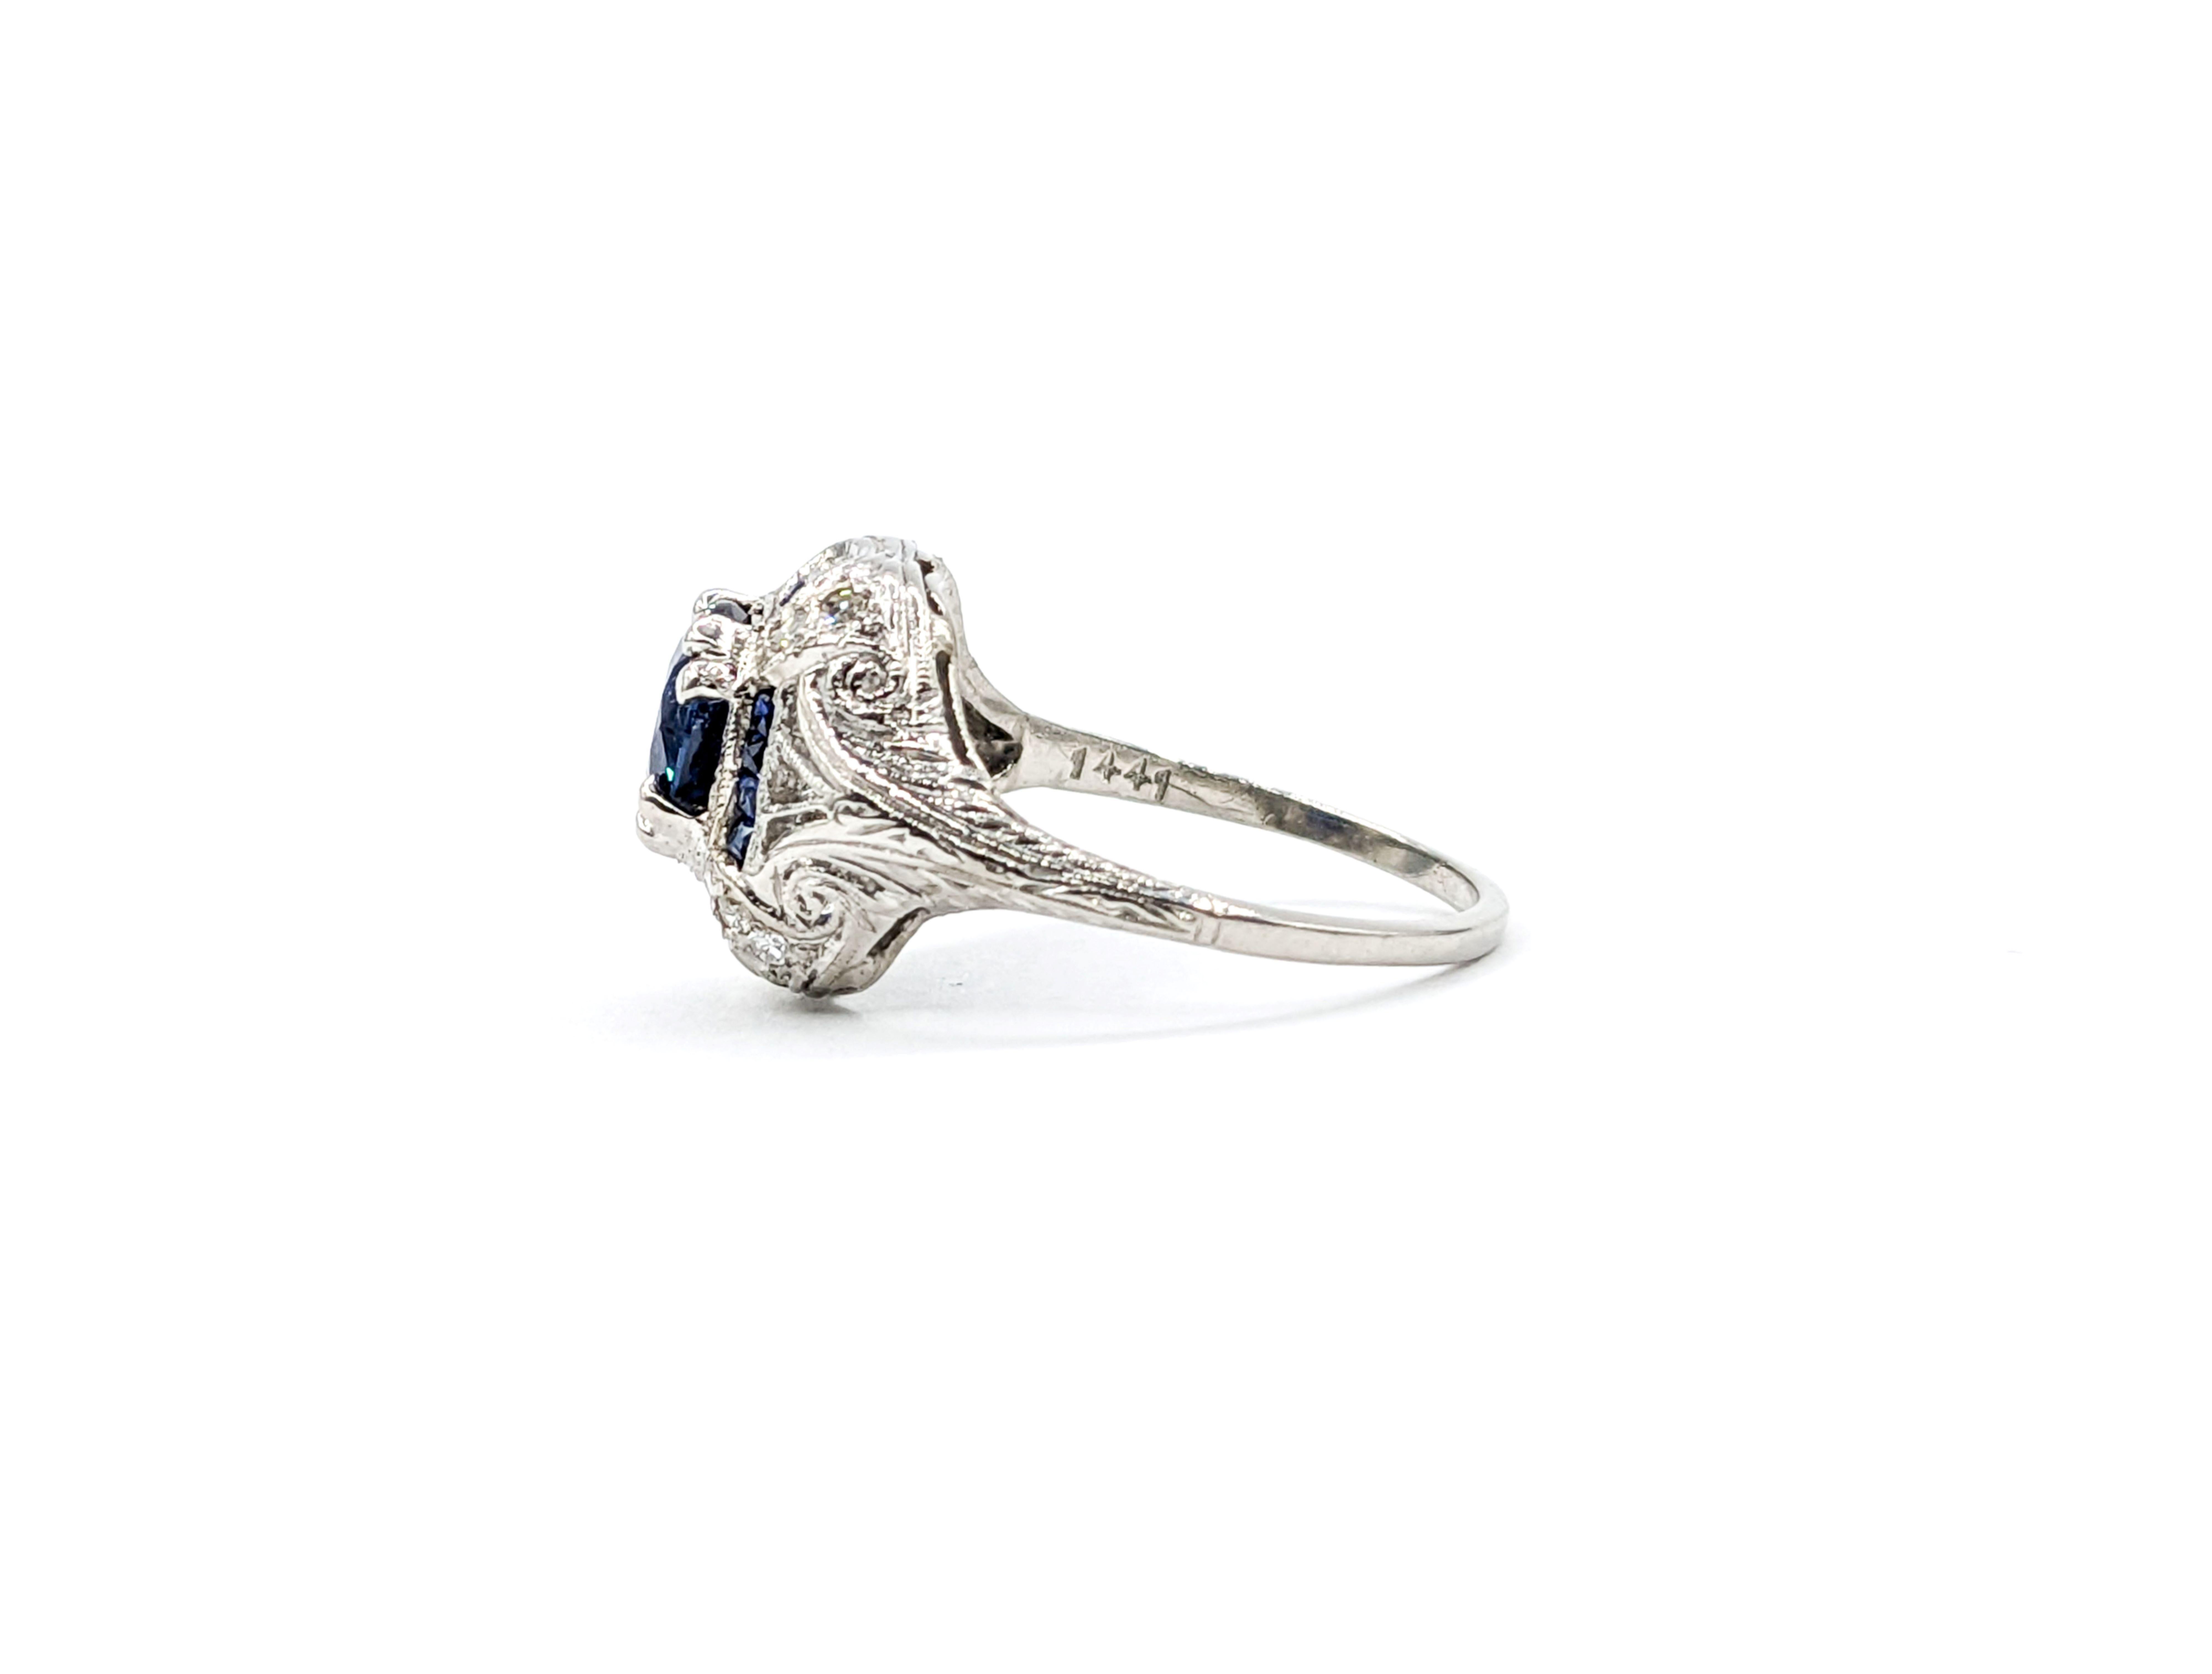 Fantastic Antique Art Deco Ring with Sapphire and Diamonds in Platinum Filigree 2